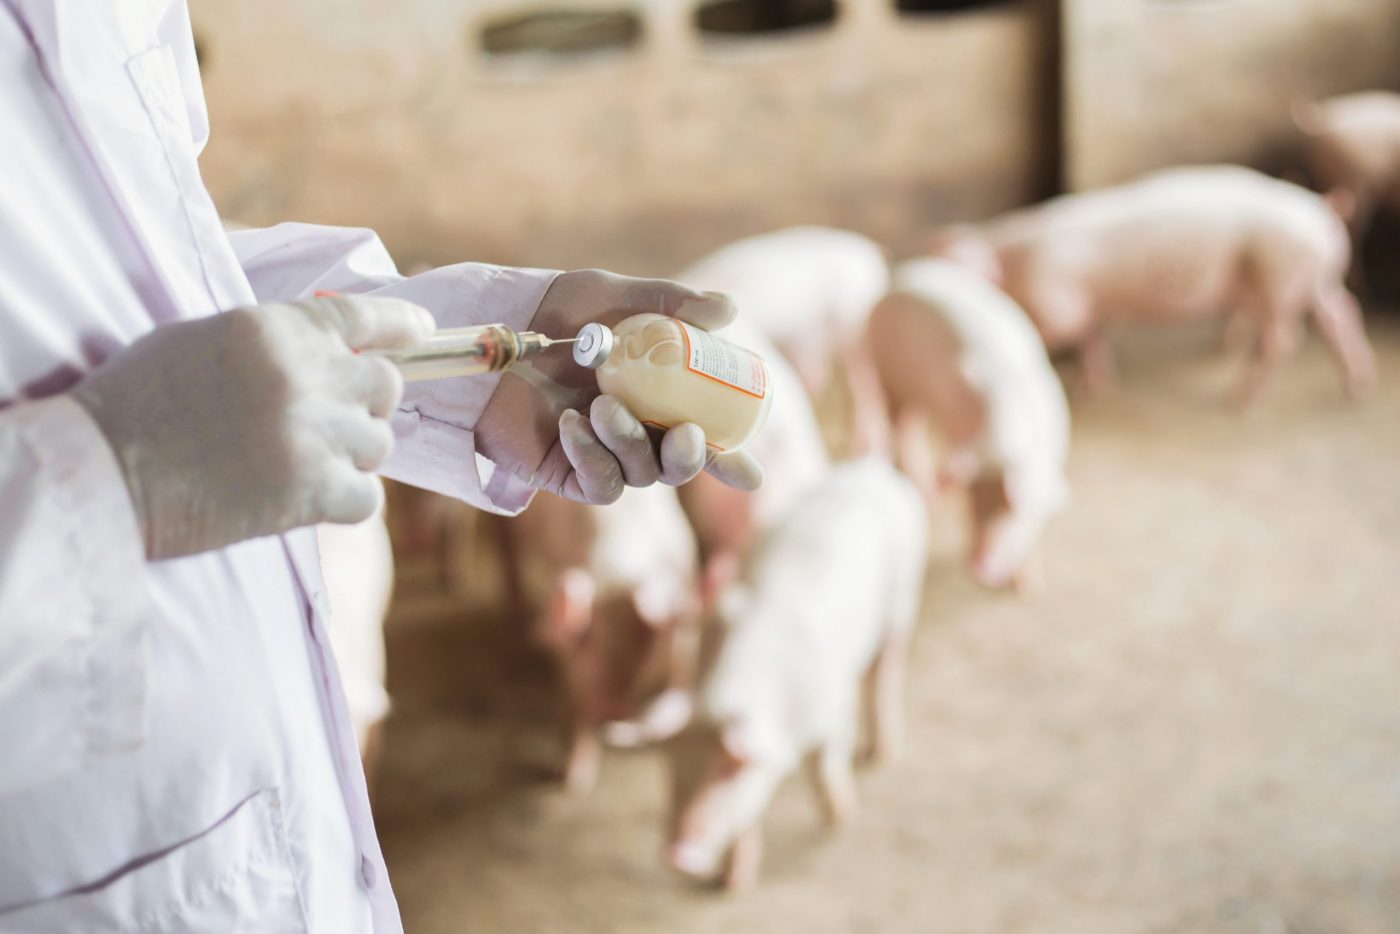 A veterinarian giving a pig a vaccine.